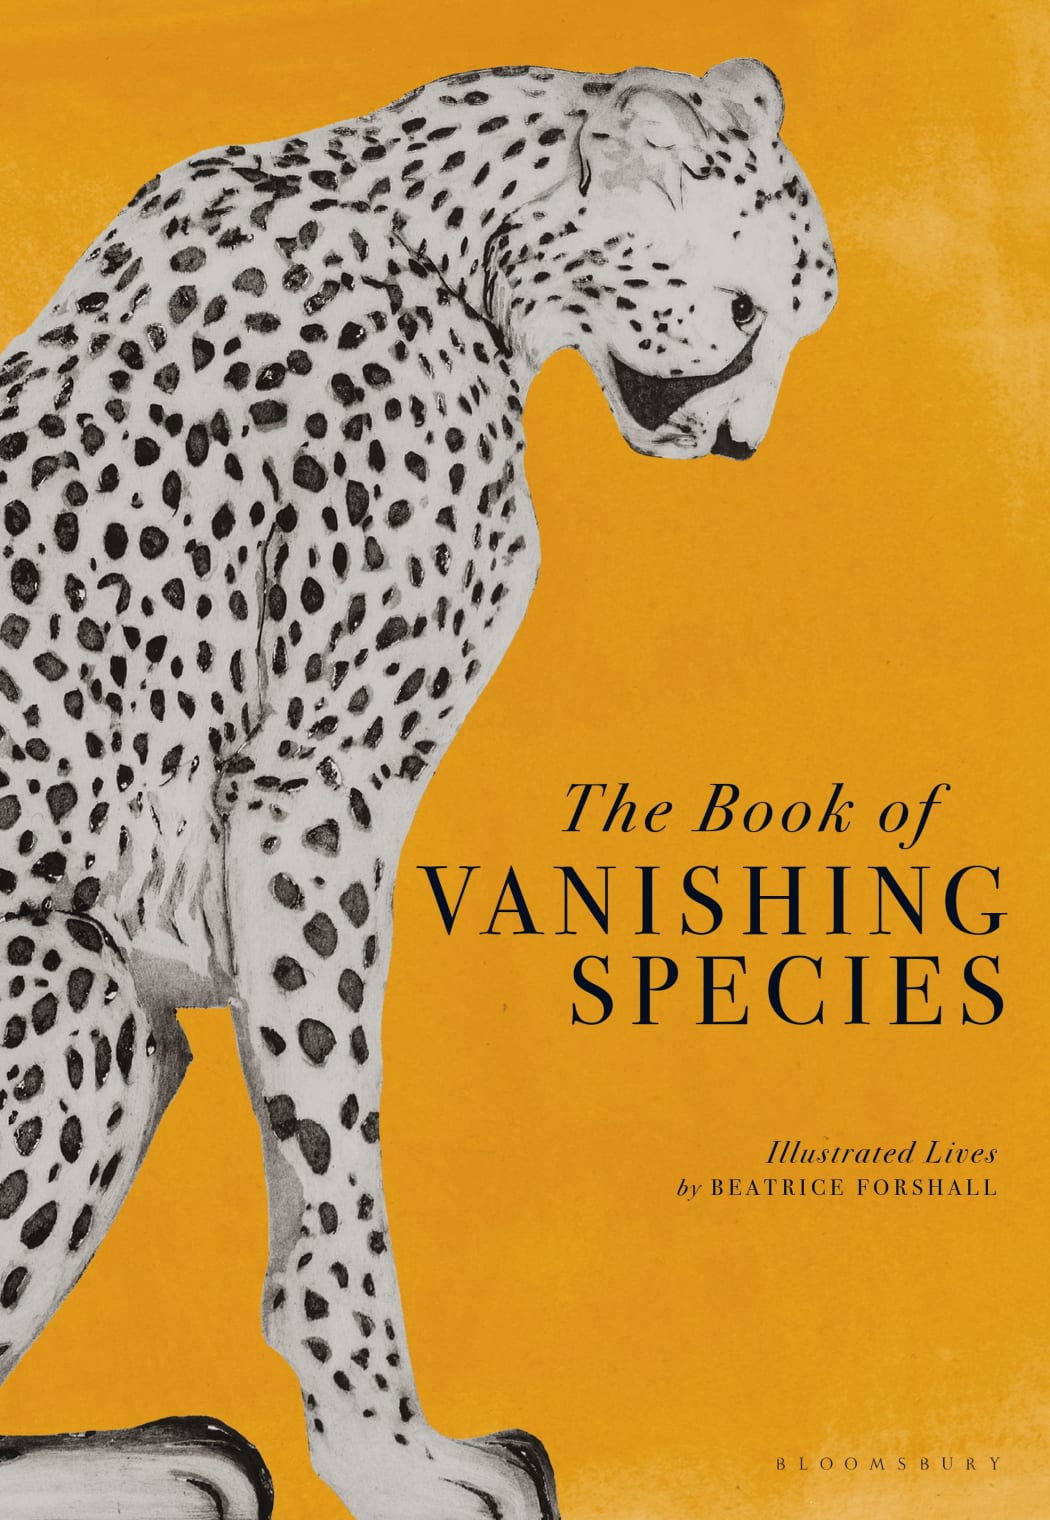 Beatrice Forshall's Vanishing Species